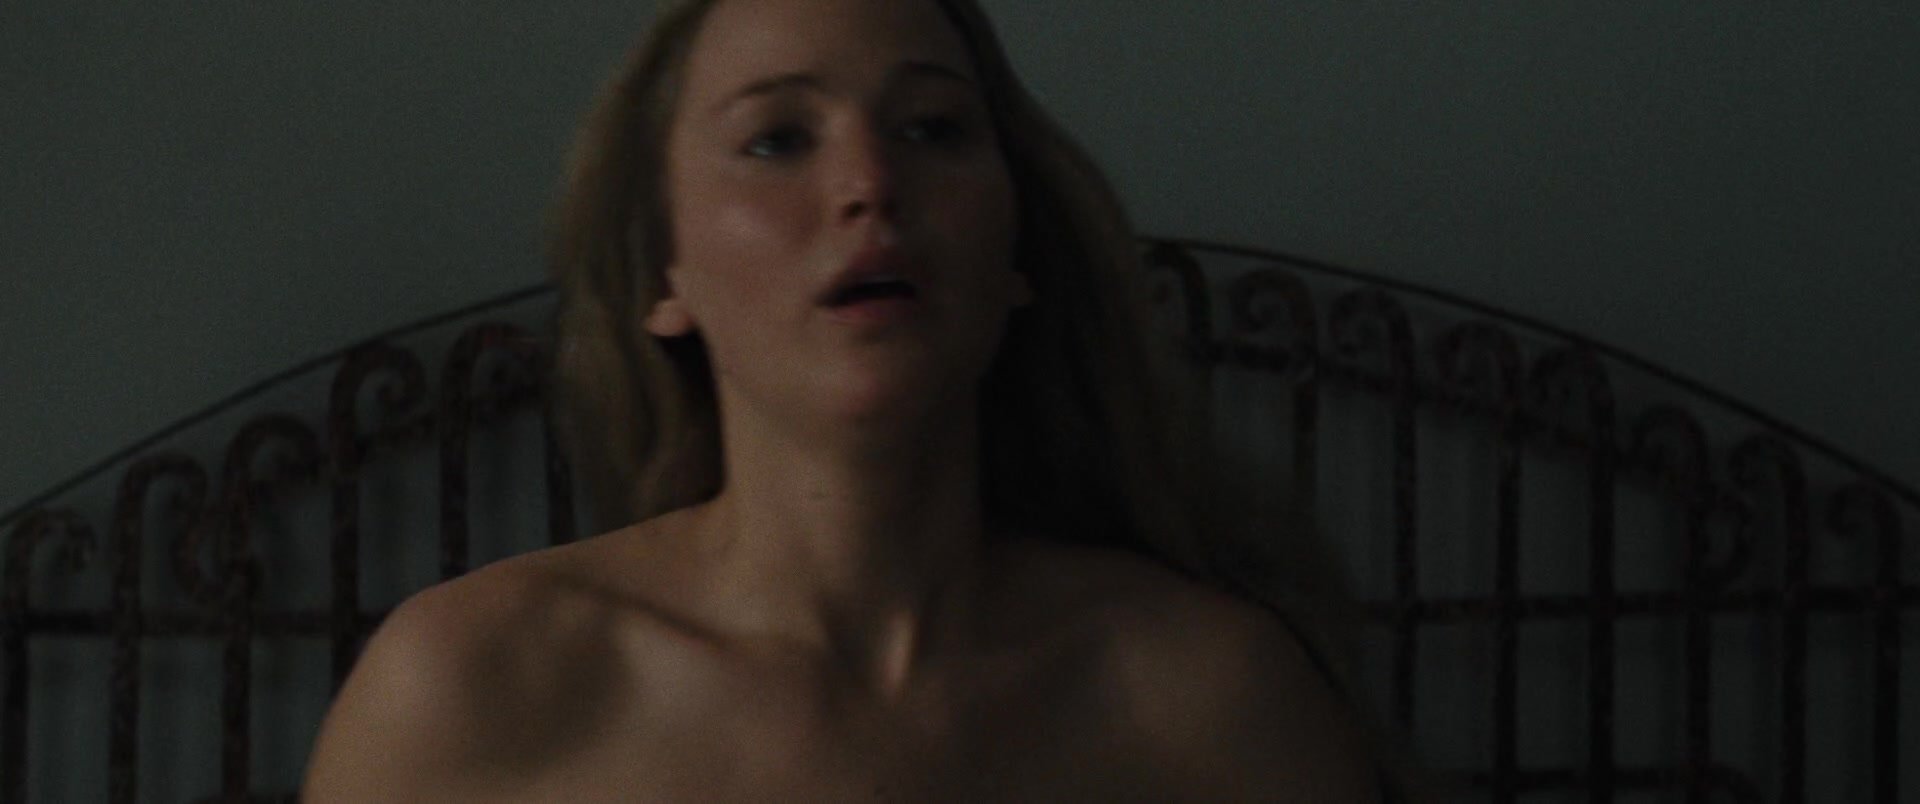 Все порно ролики с Jennifer Lawrence смотрите онлайн